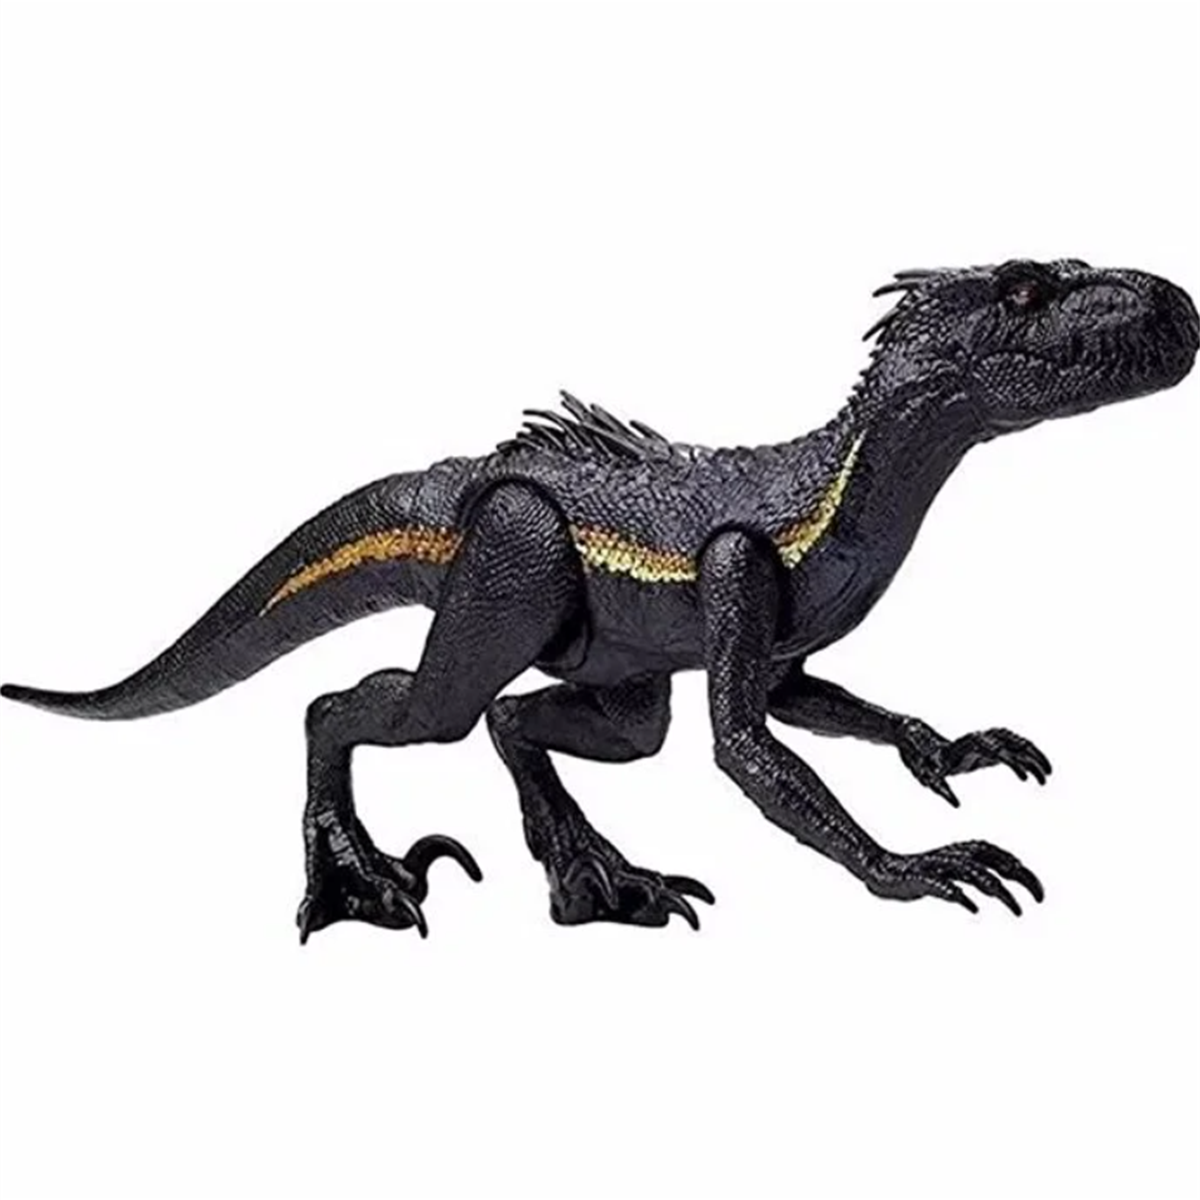 Jurassic World 6' Dinozor Figürü GWT49-HPT02 | Toysall